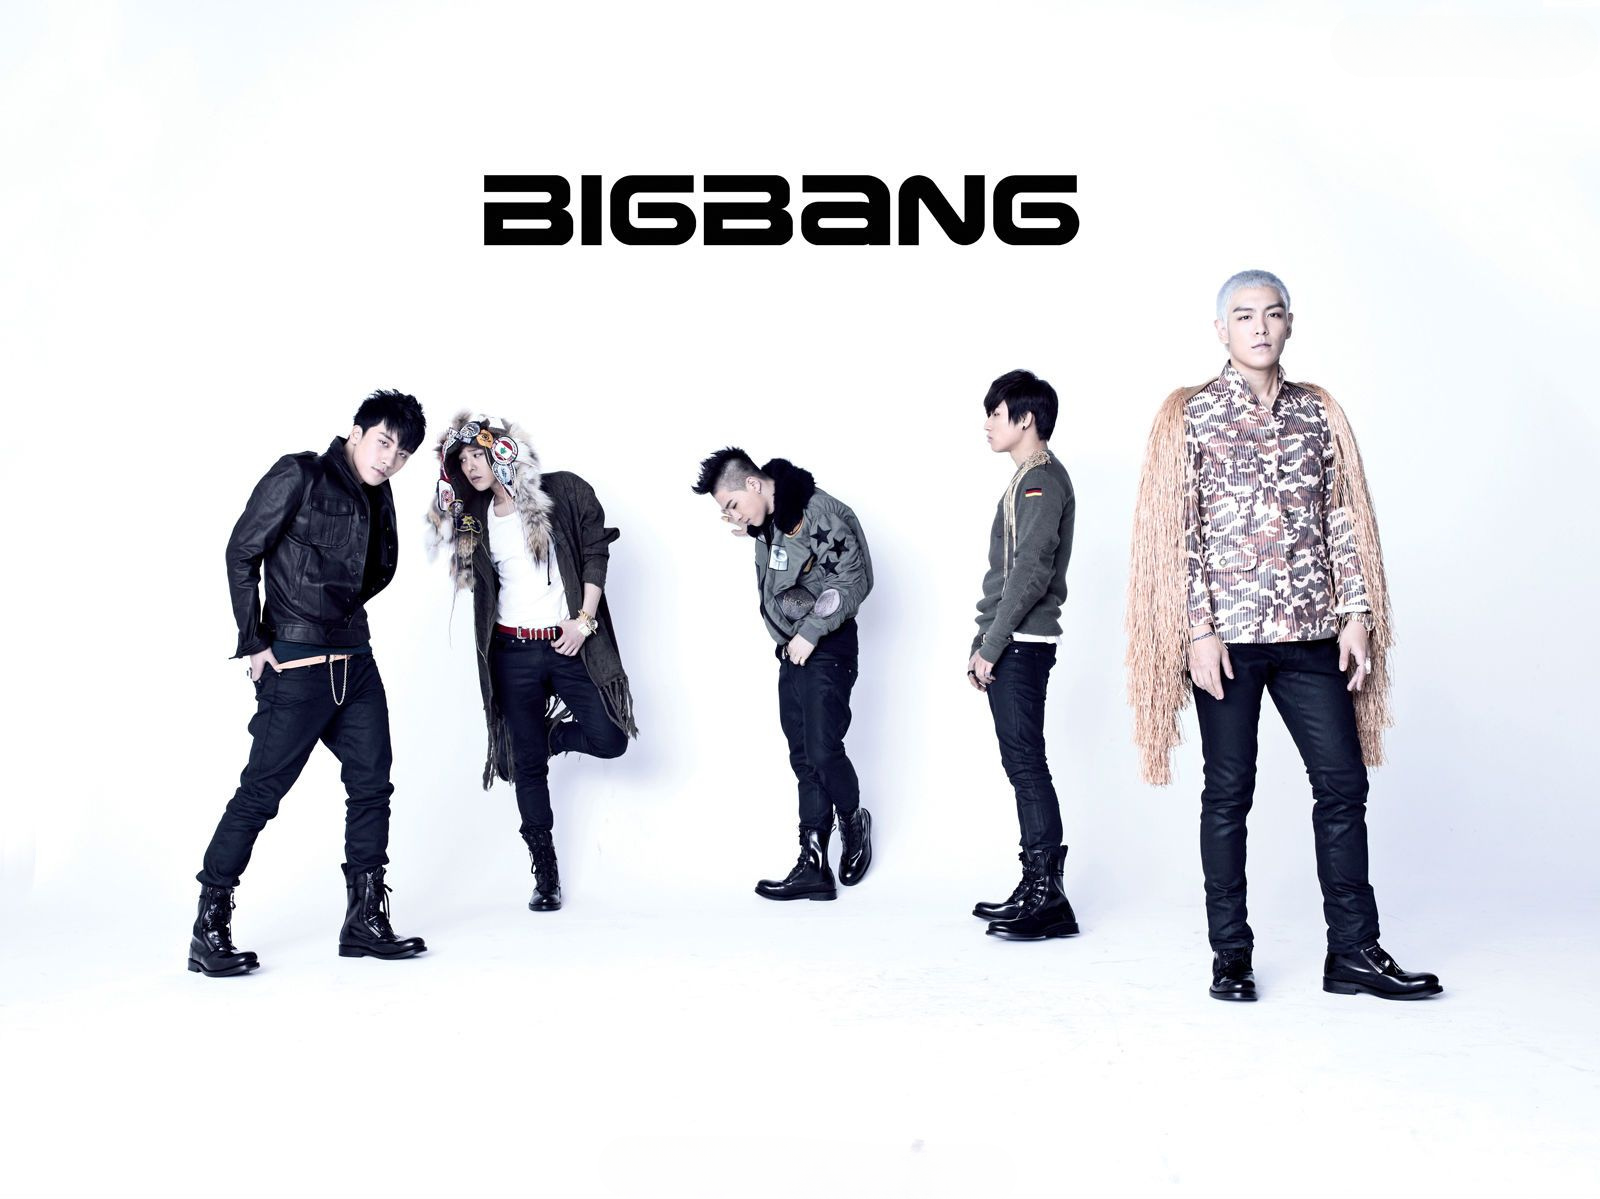 Tuttie 5 I Membri Dei Bigbang: G-dragon, T.o.p, Taeyang, Daesung E Seungri